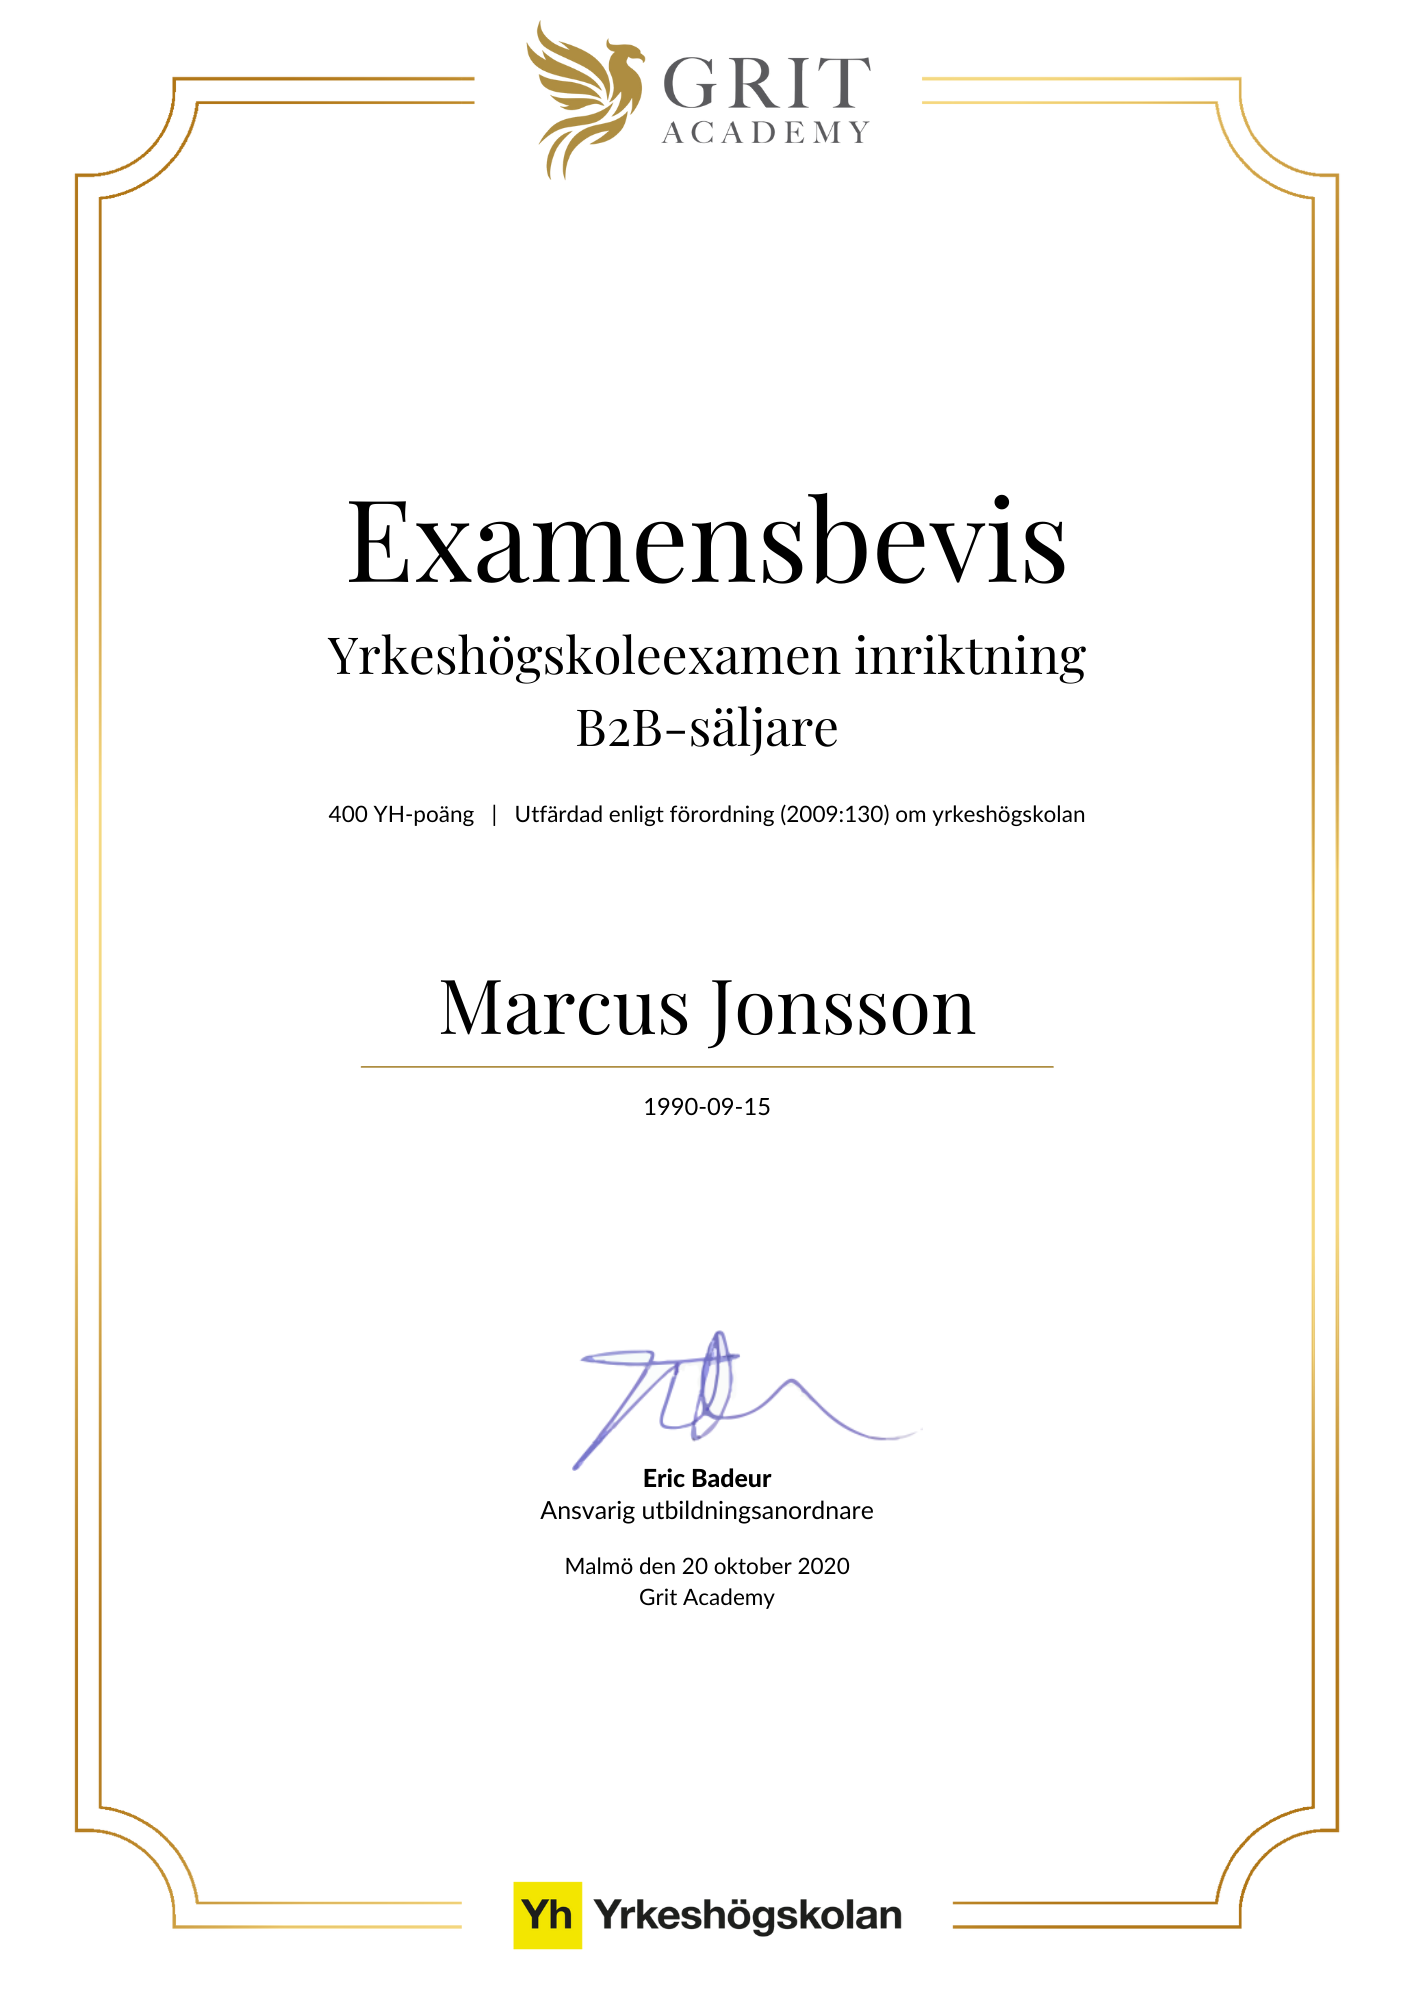 Examensbevis Marcus Jonsson - 1